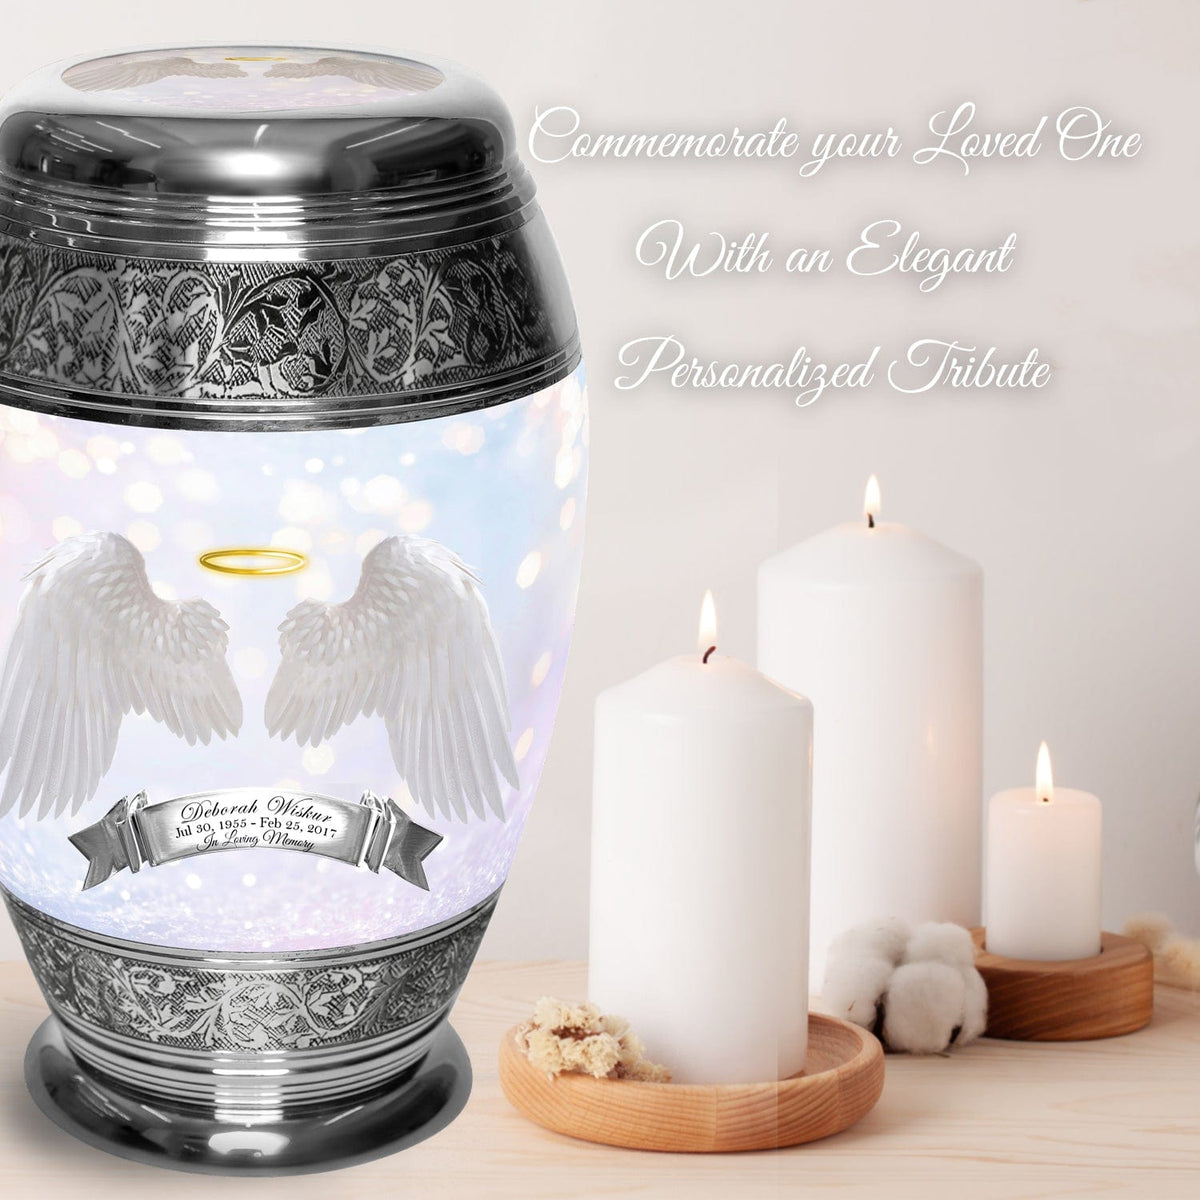 Commemorative Cremation Urns Guardian Angel Cremation Urns